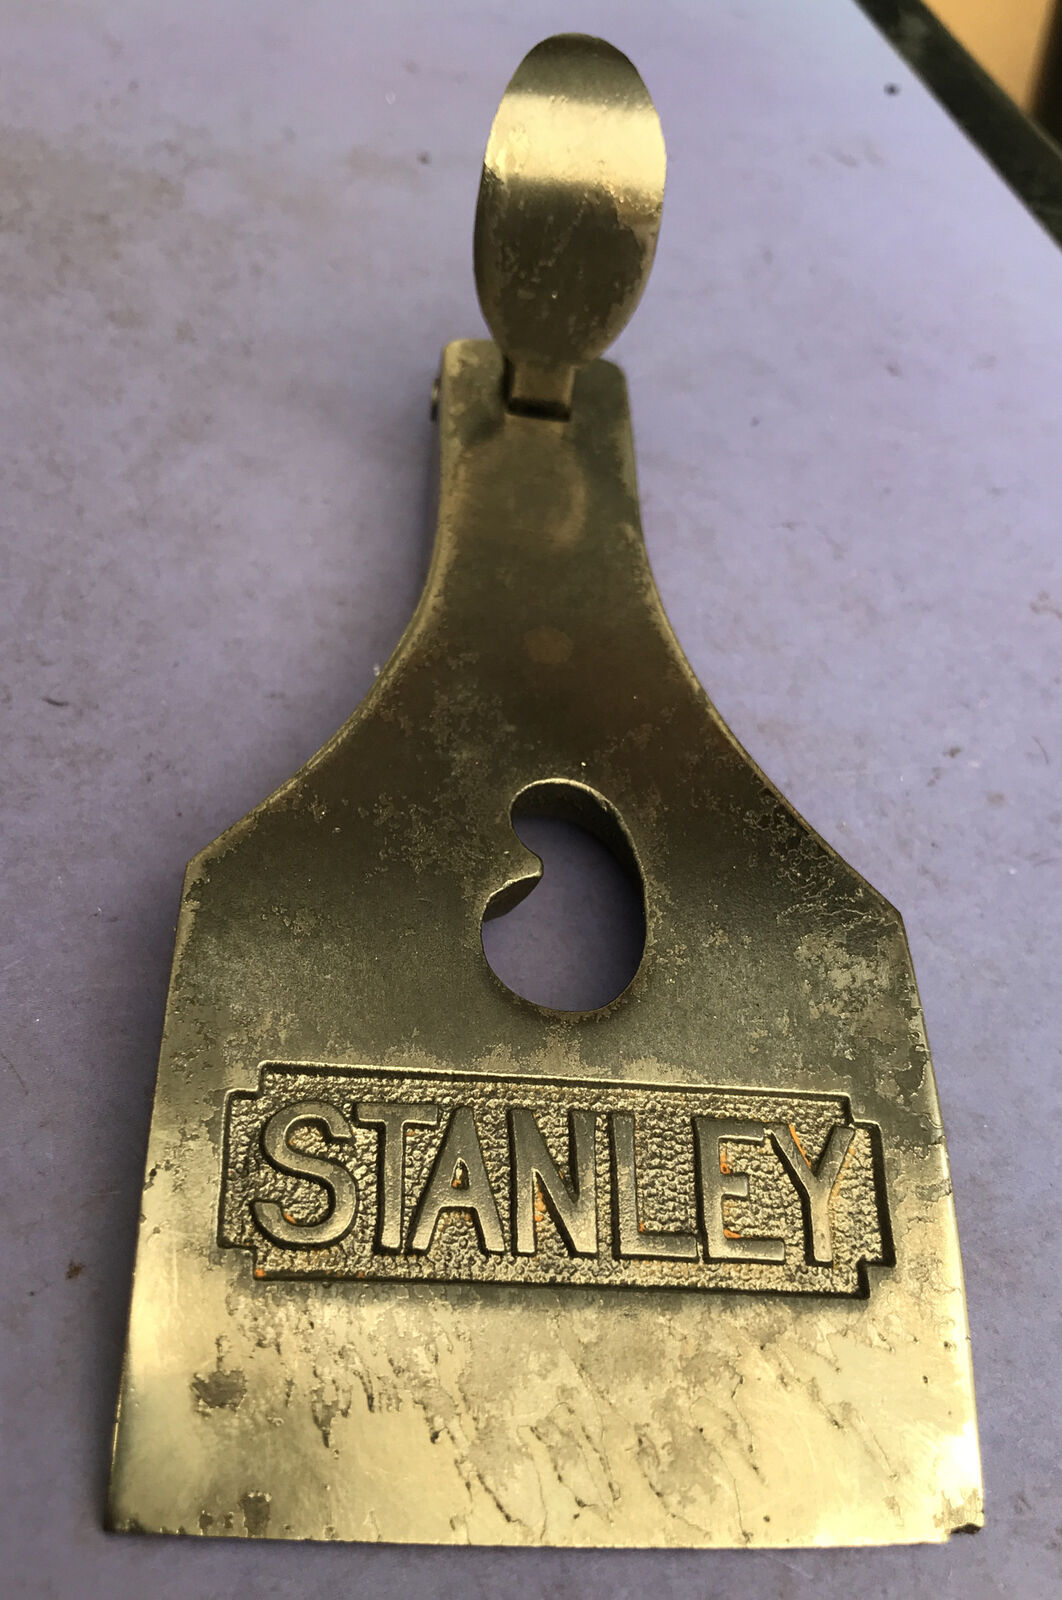 Stanley 4 1/2, 5 1/2, 6 or 7 plane lever cap 2 5/16" - vintage old tool part